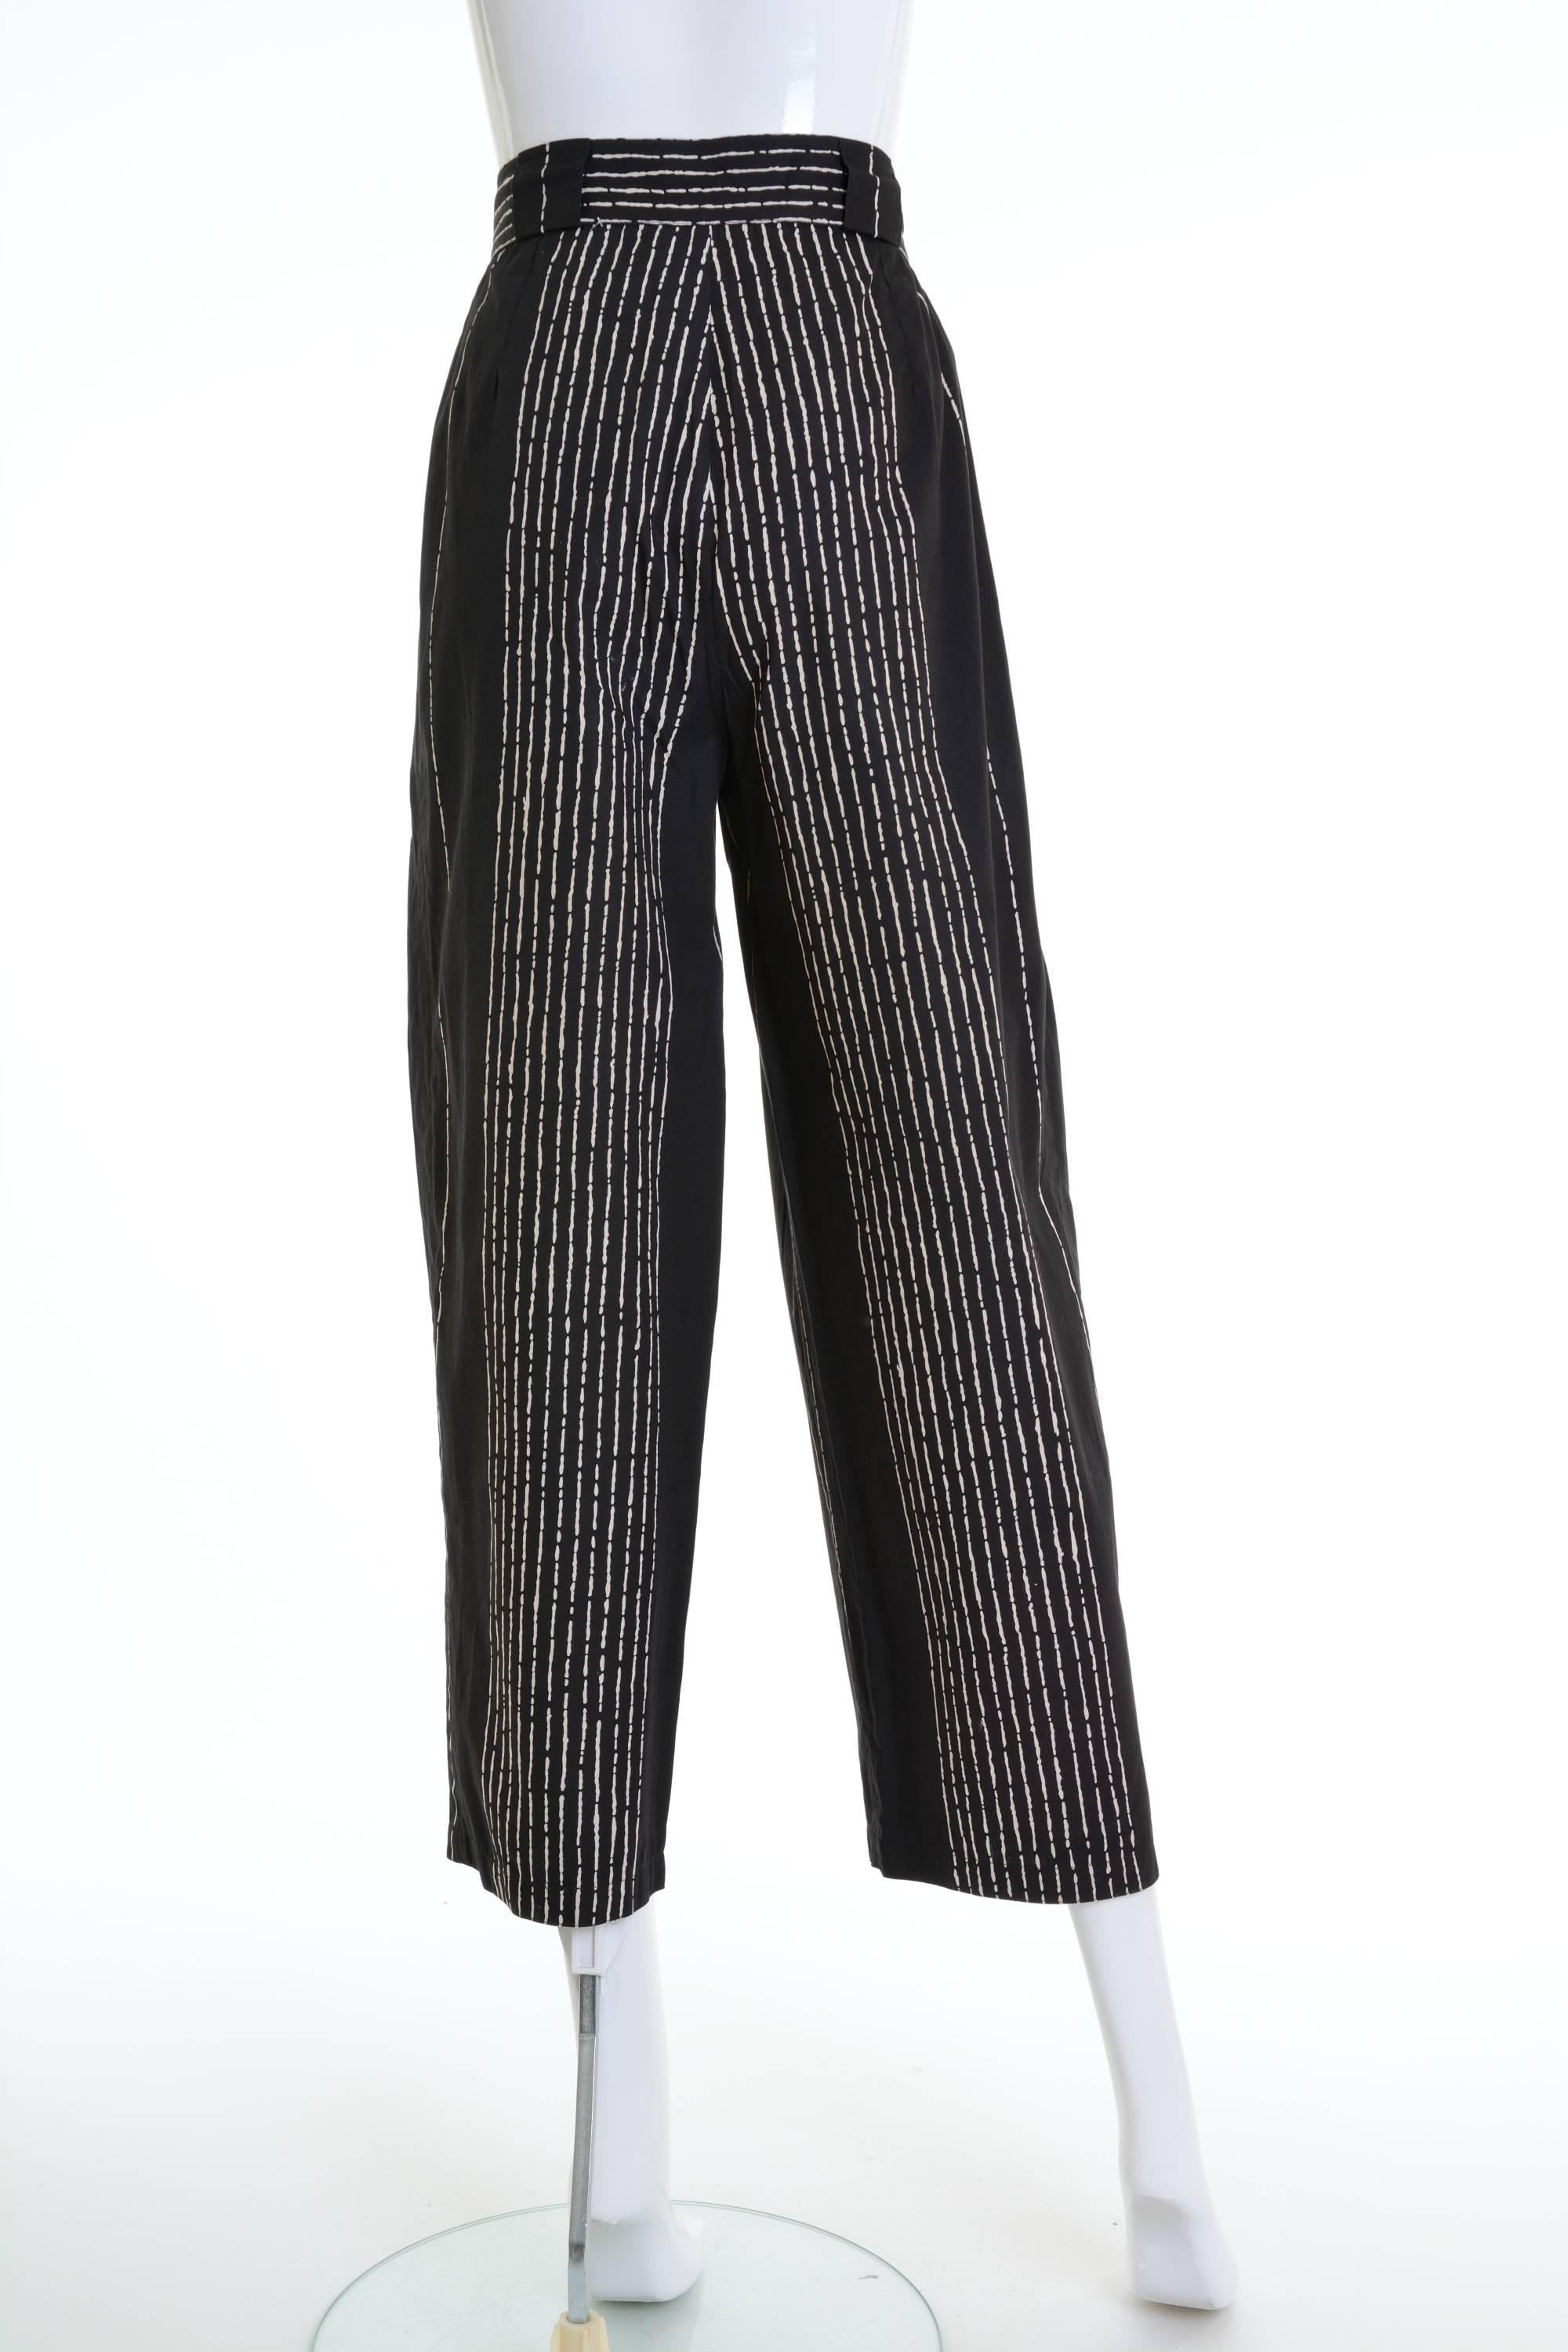 Women's 1980s GIANNI VERSACE Black Striped Cotton Pants